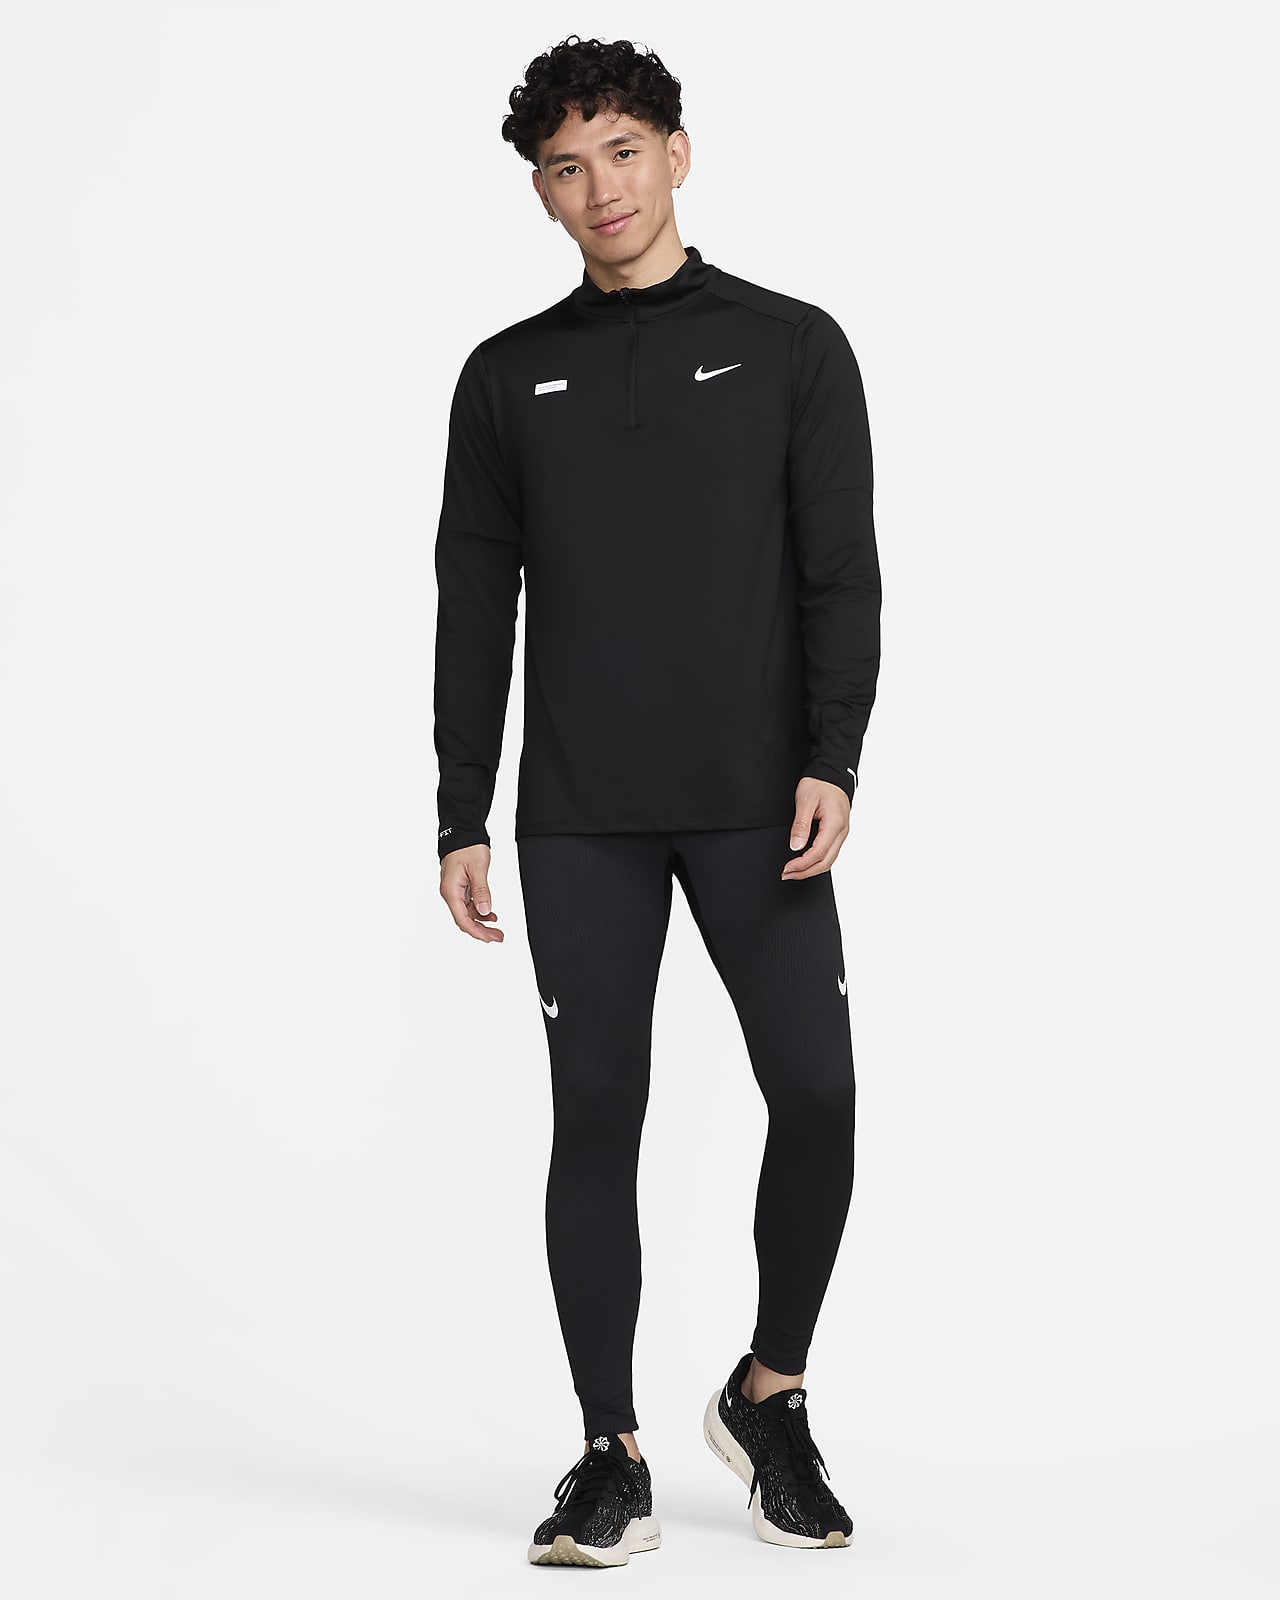 Men's Nike Dri-Fit Advanced Aeroswift Tight – The Runners Shop Canberra